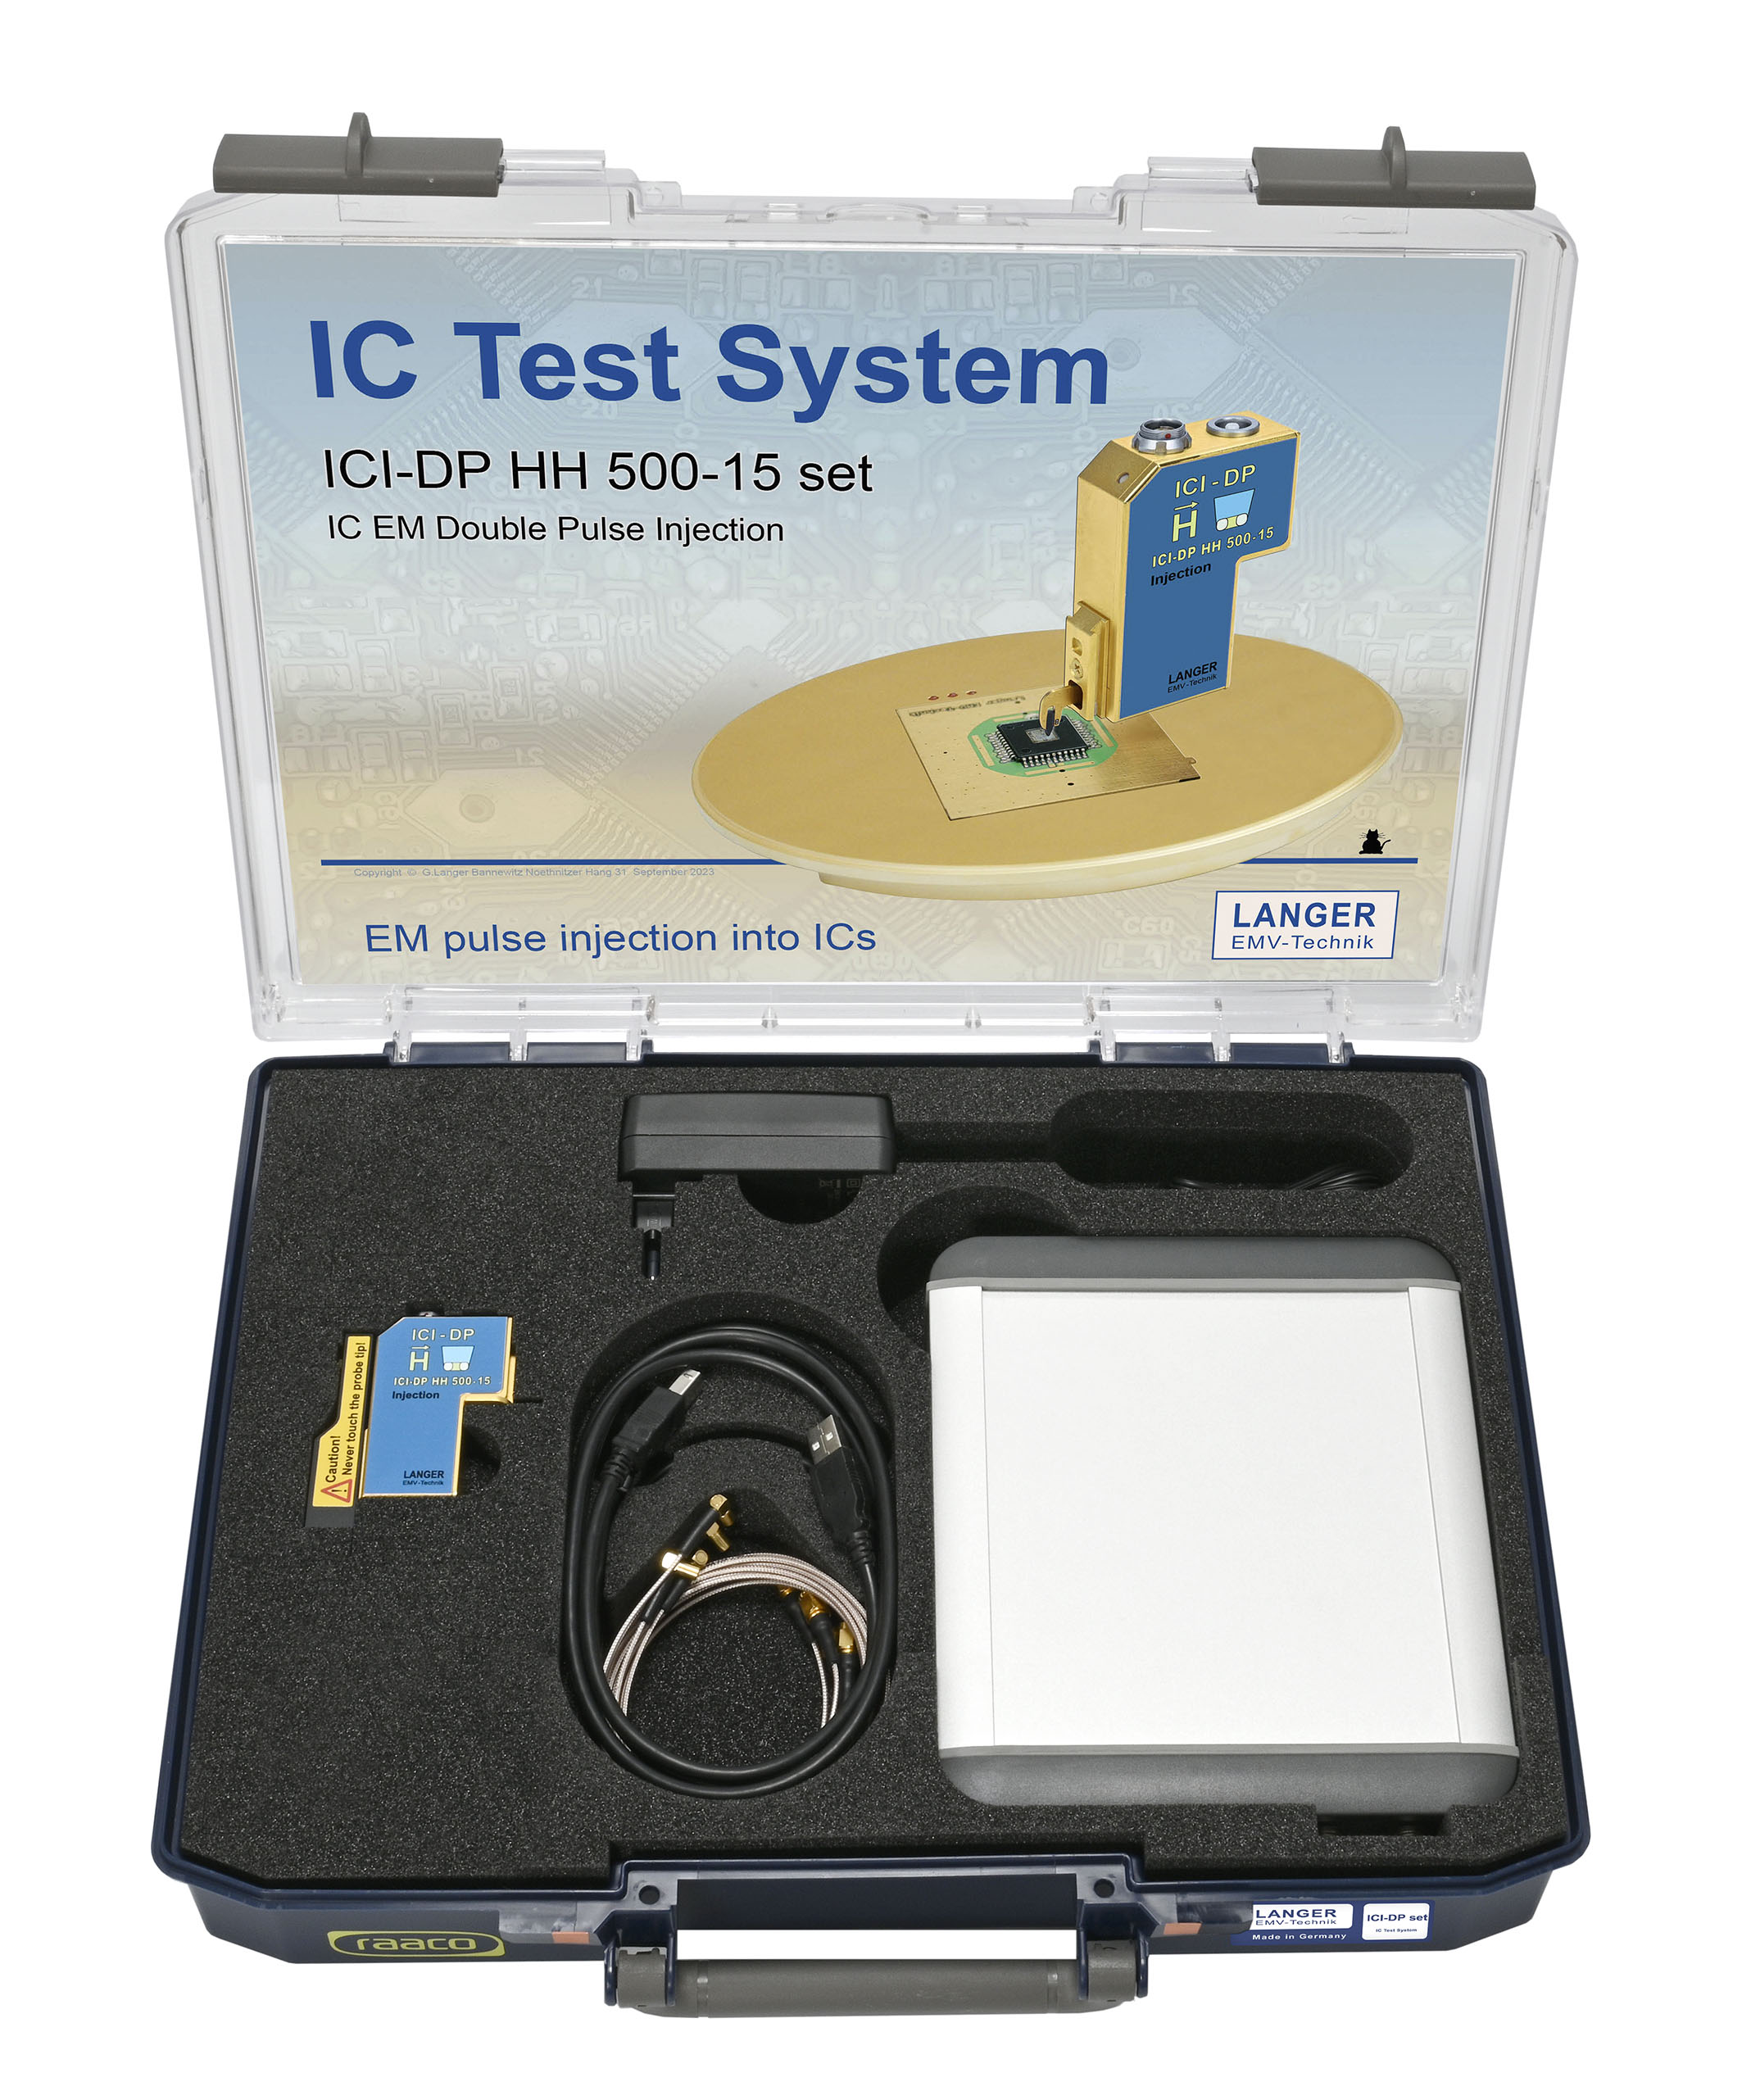 Kofferinhalt ICI-DP HH500-15 set